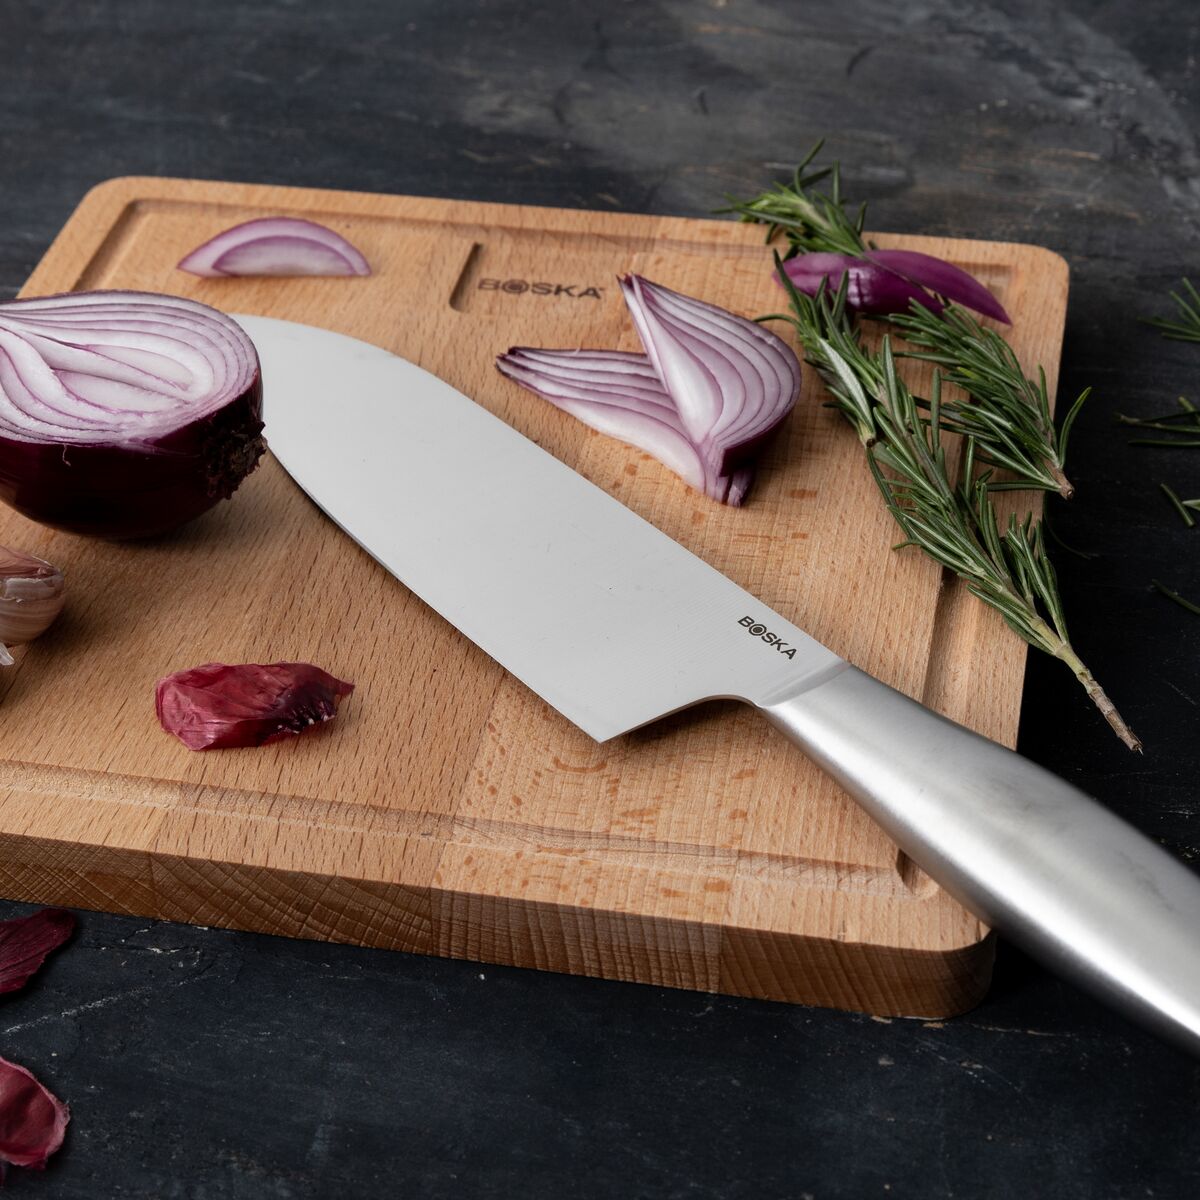 Hampton Forge Chef Knife - Shop Knives at H-E-B